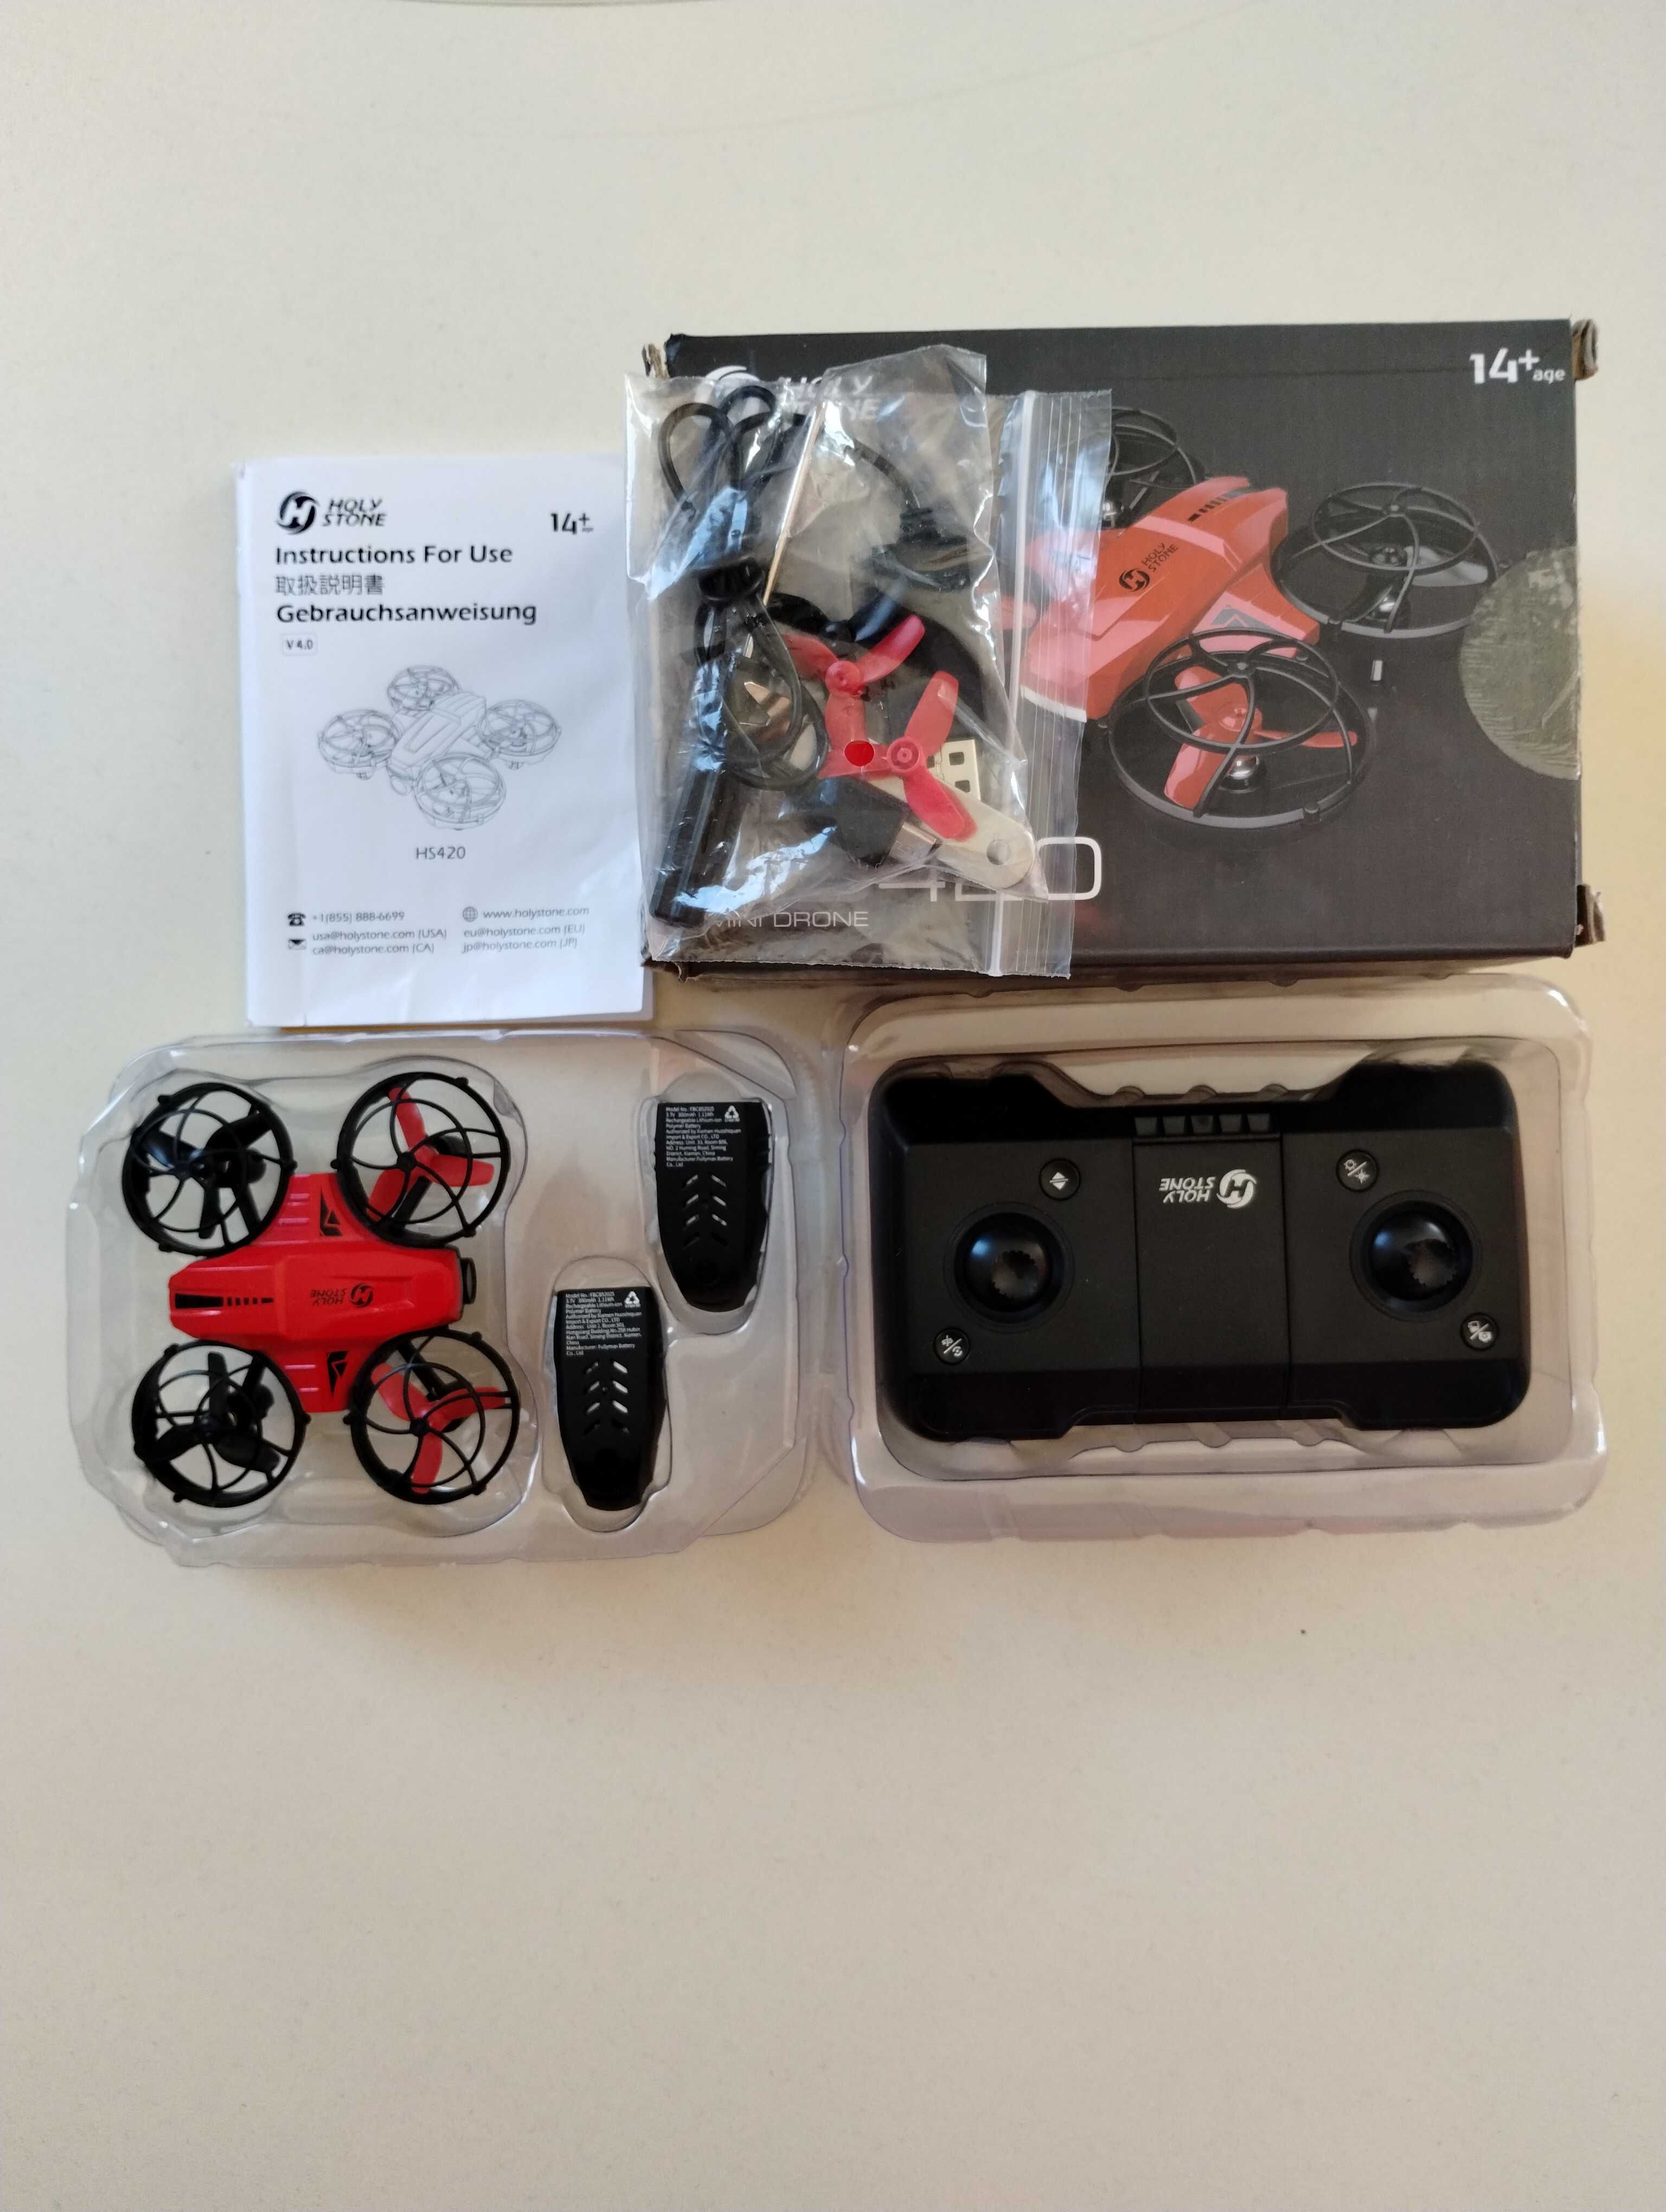 Mini dron zabawka HOLY STONE model HS 420.